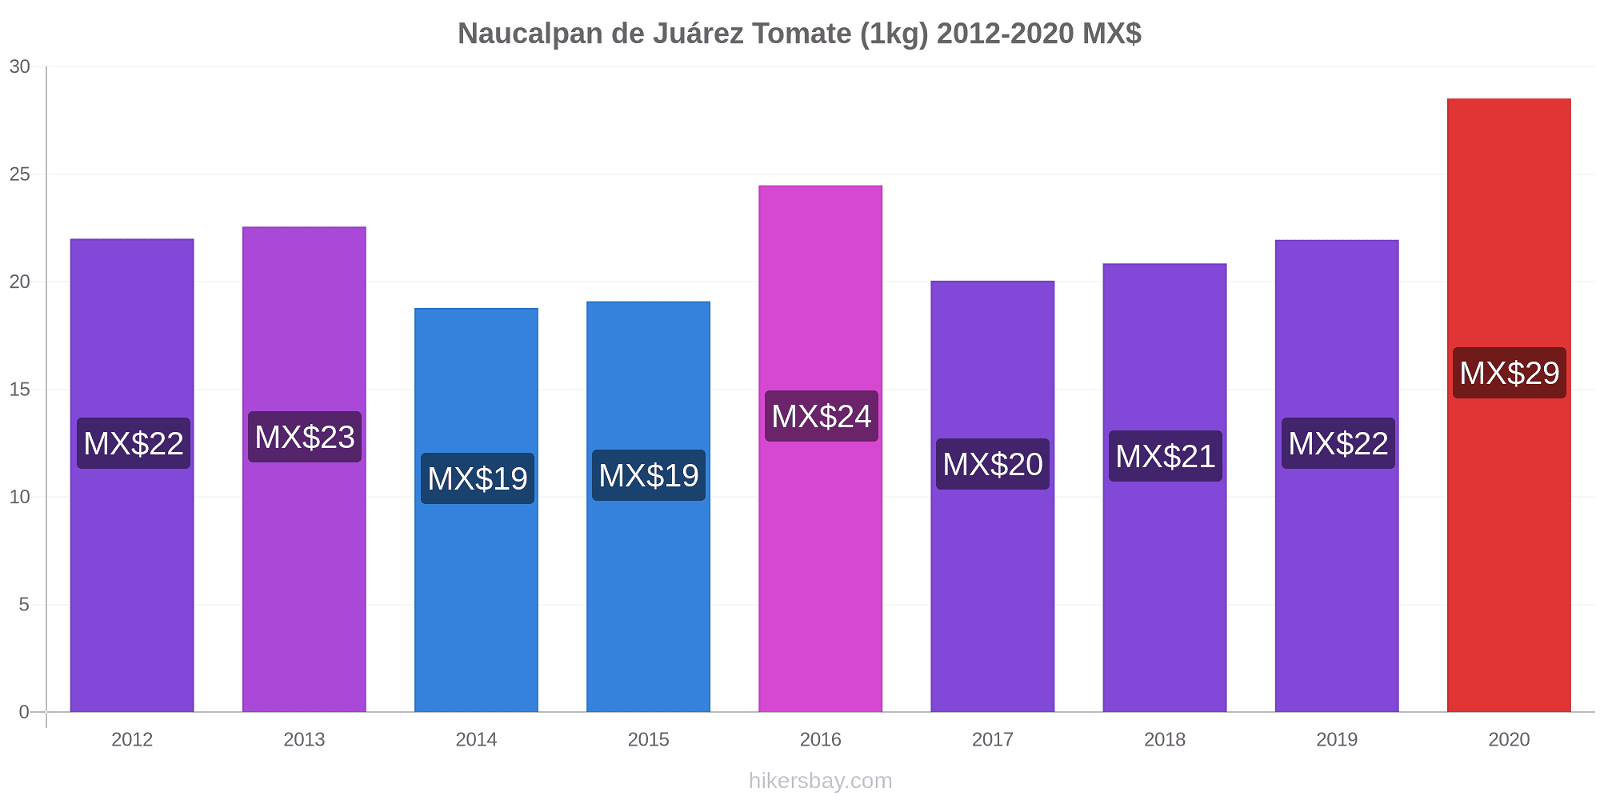 Naucalpan de Juárez cambios de precios Tomate (1kg) hikersbay.com